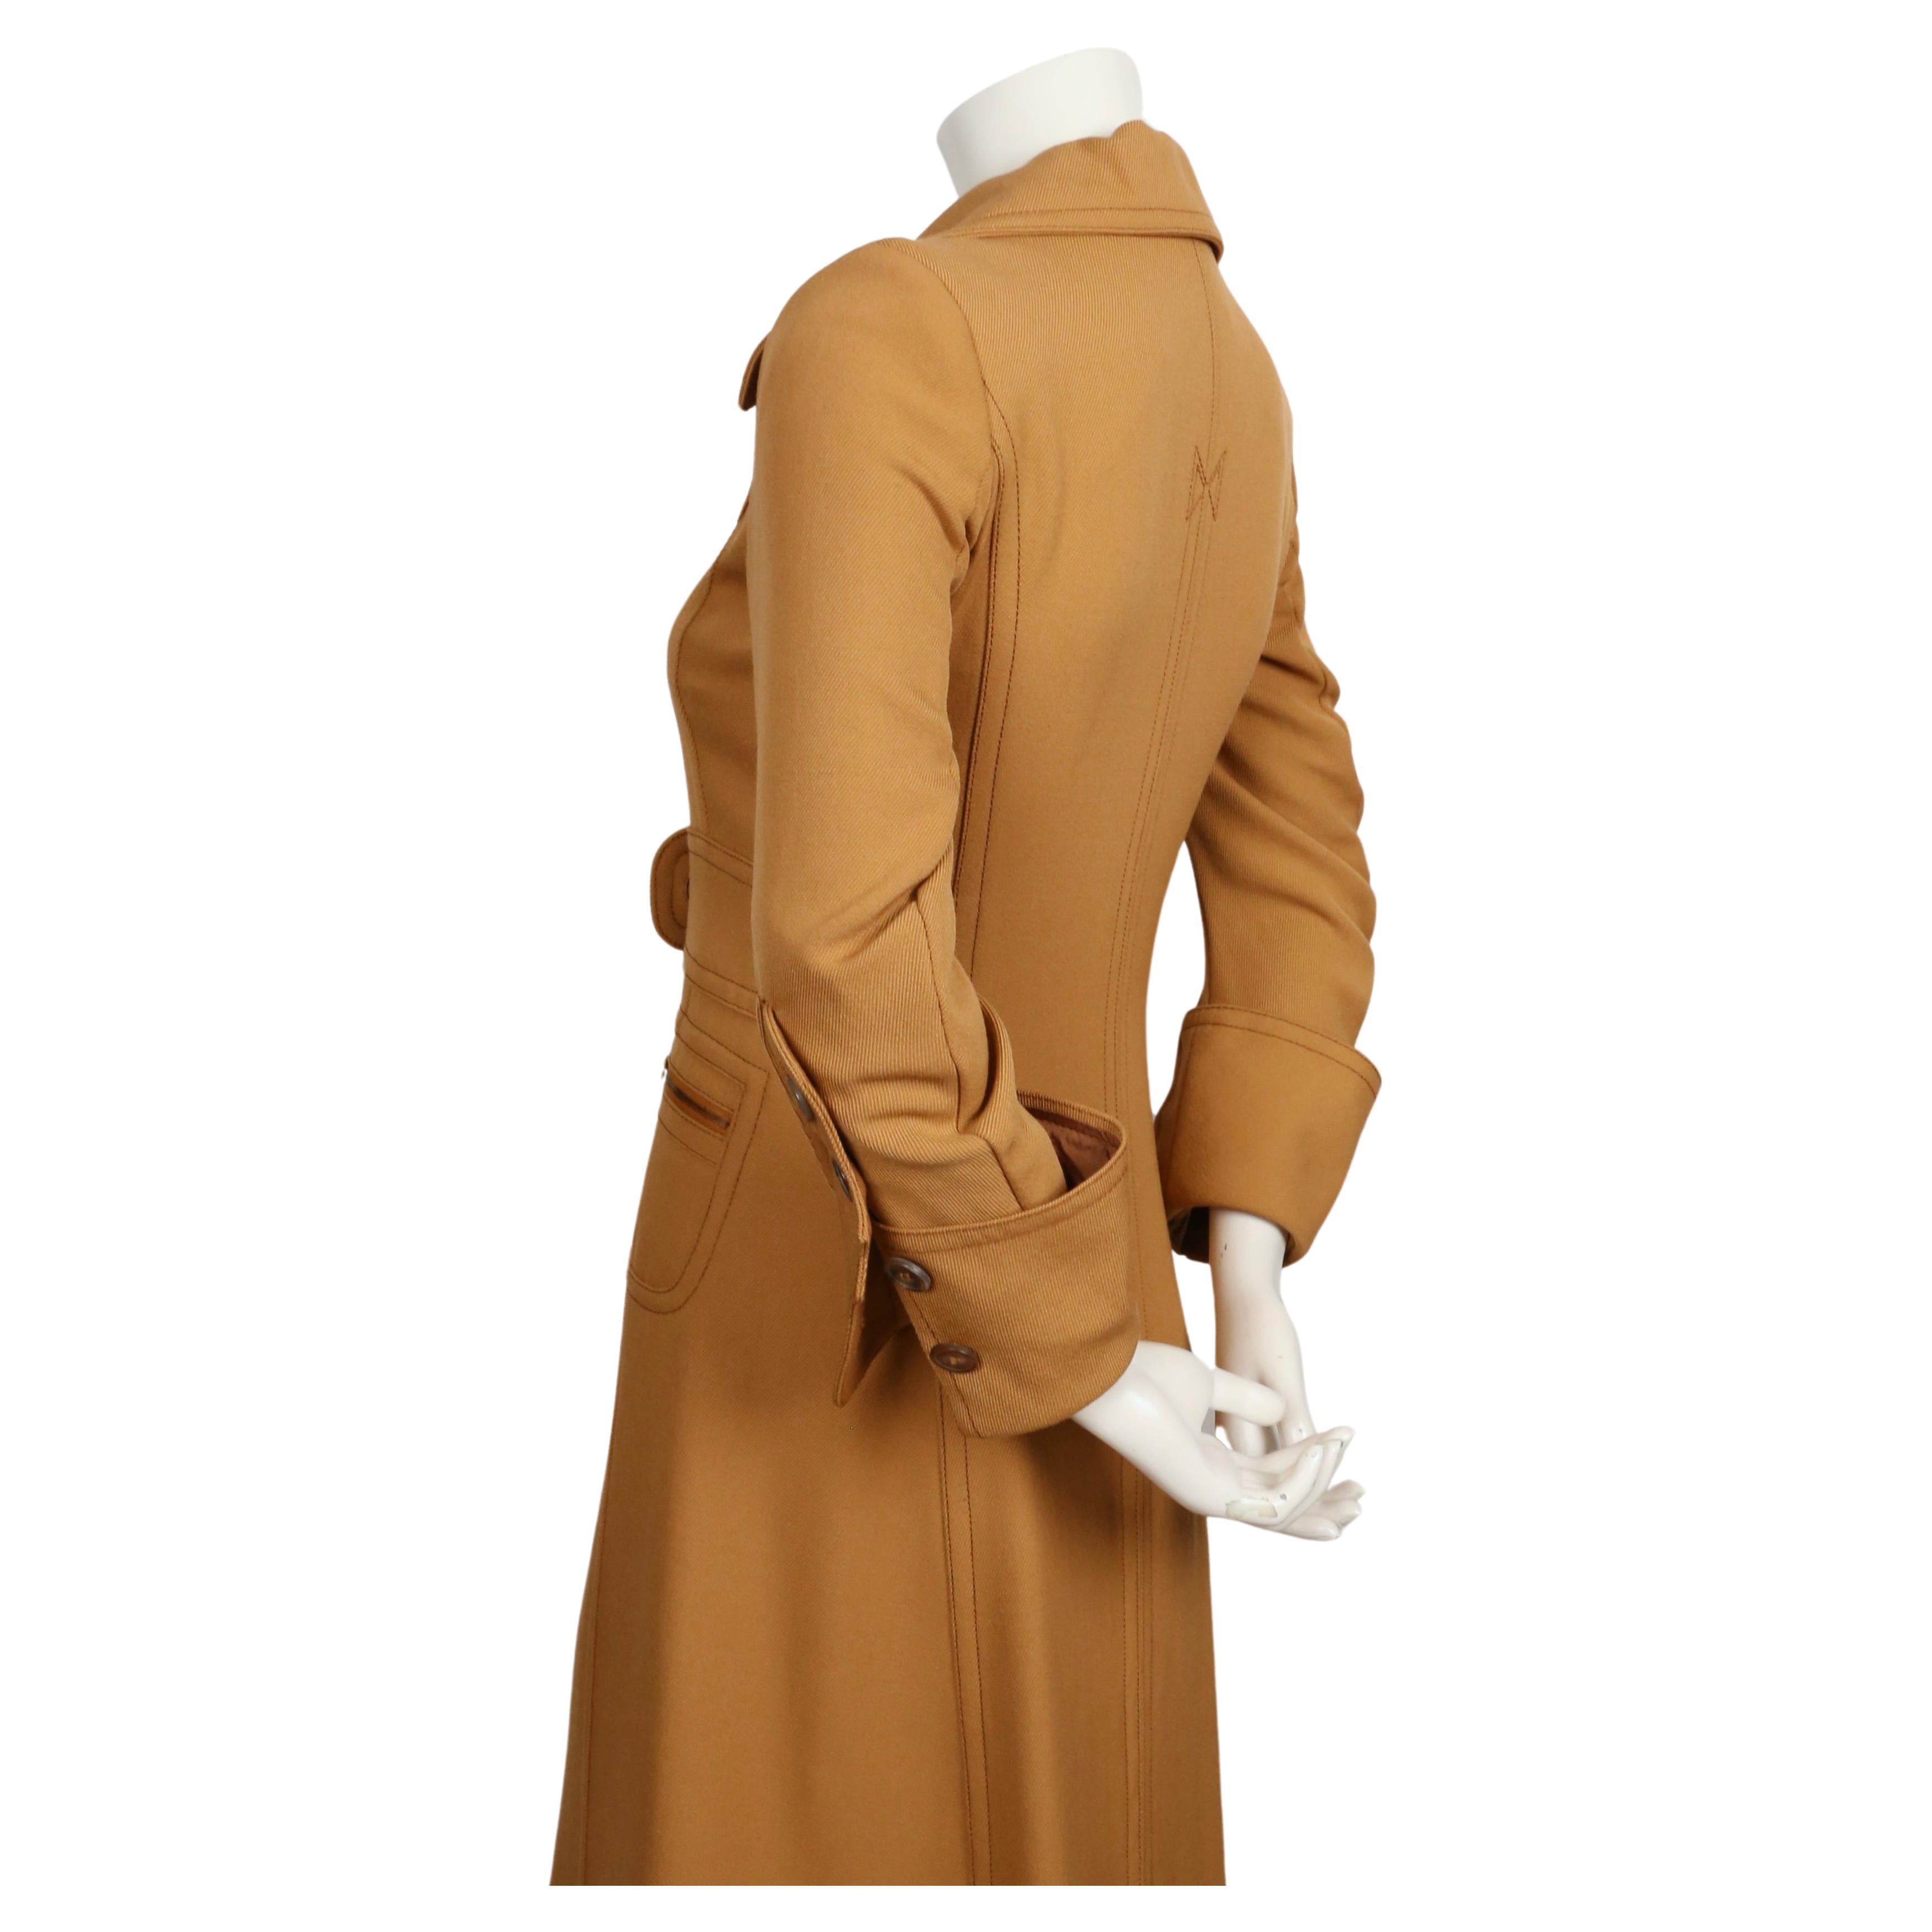 2014 MARGIELA by JOHN GALLIANO long gabardine RUNWAY coat For Sale 5